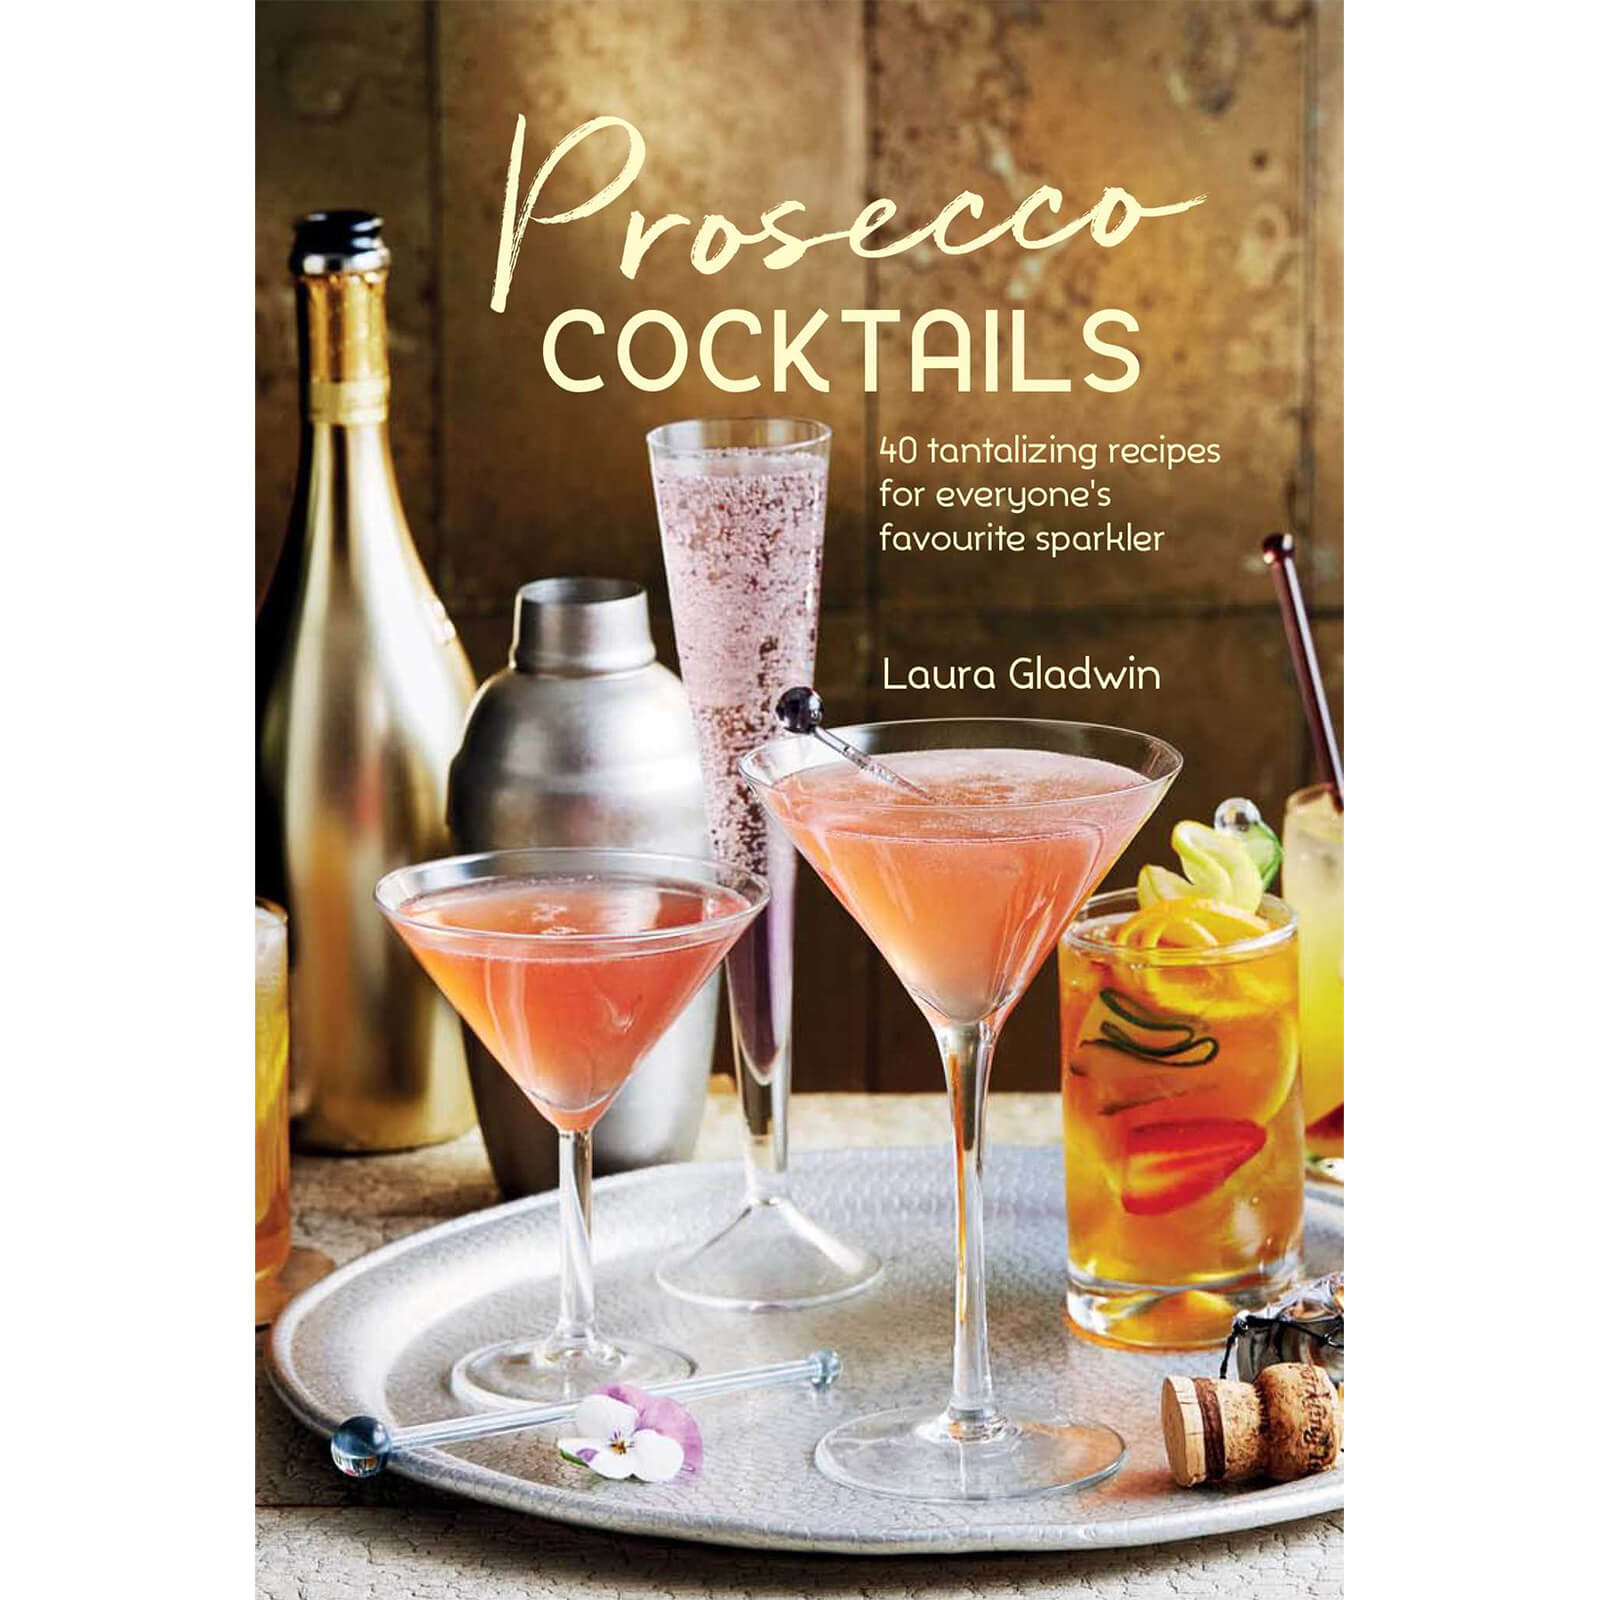 Bookspeed Prosecco cocktails - 40 tantalizing recipes (hardback)